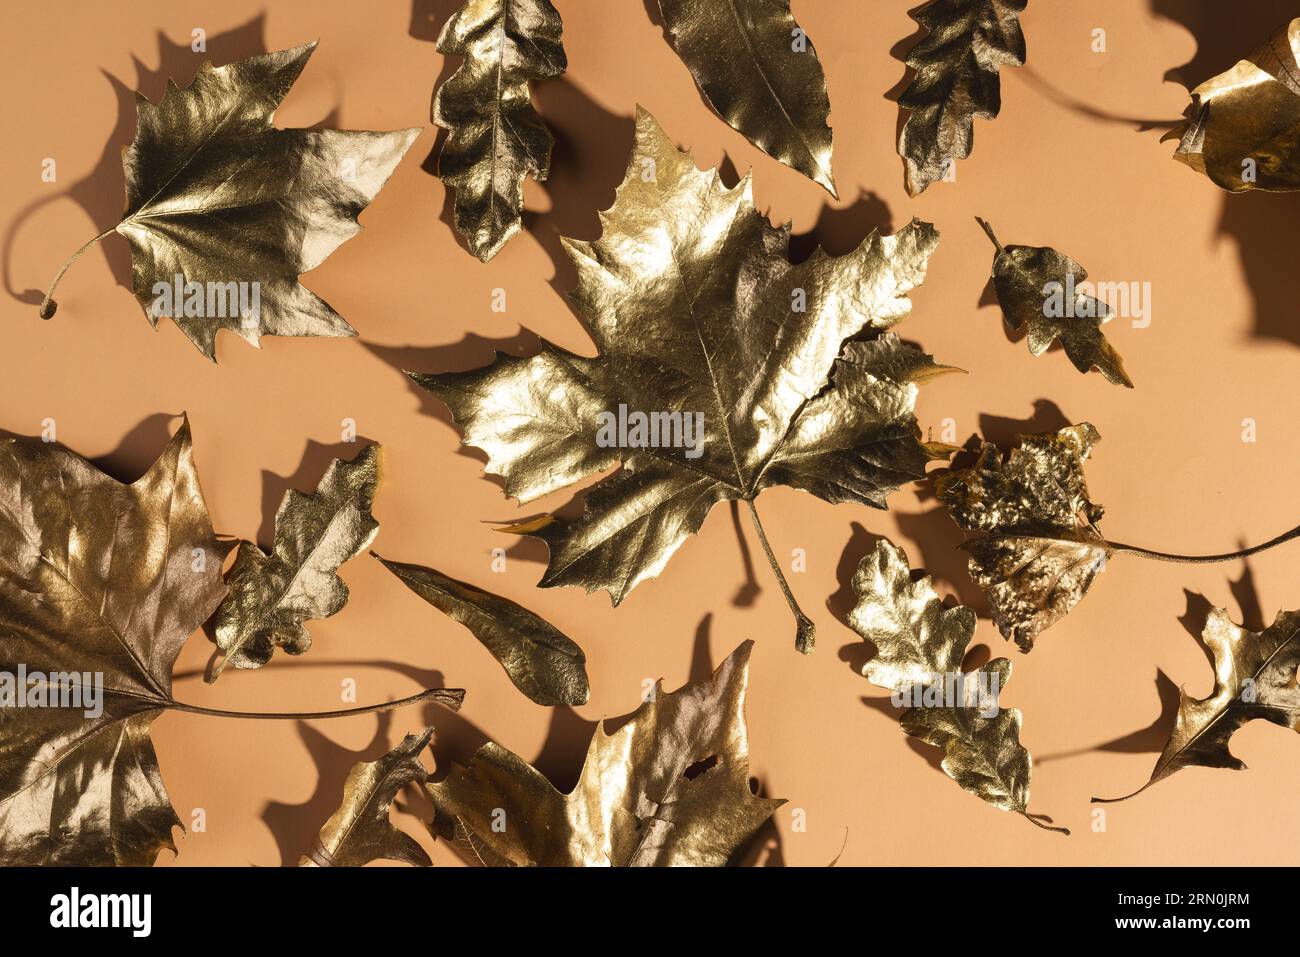 Metallic gold autumn leaves lying on orange background Stock Photo